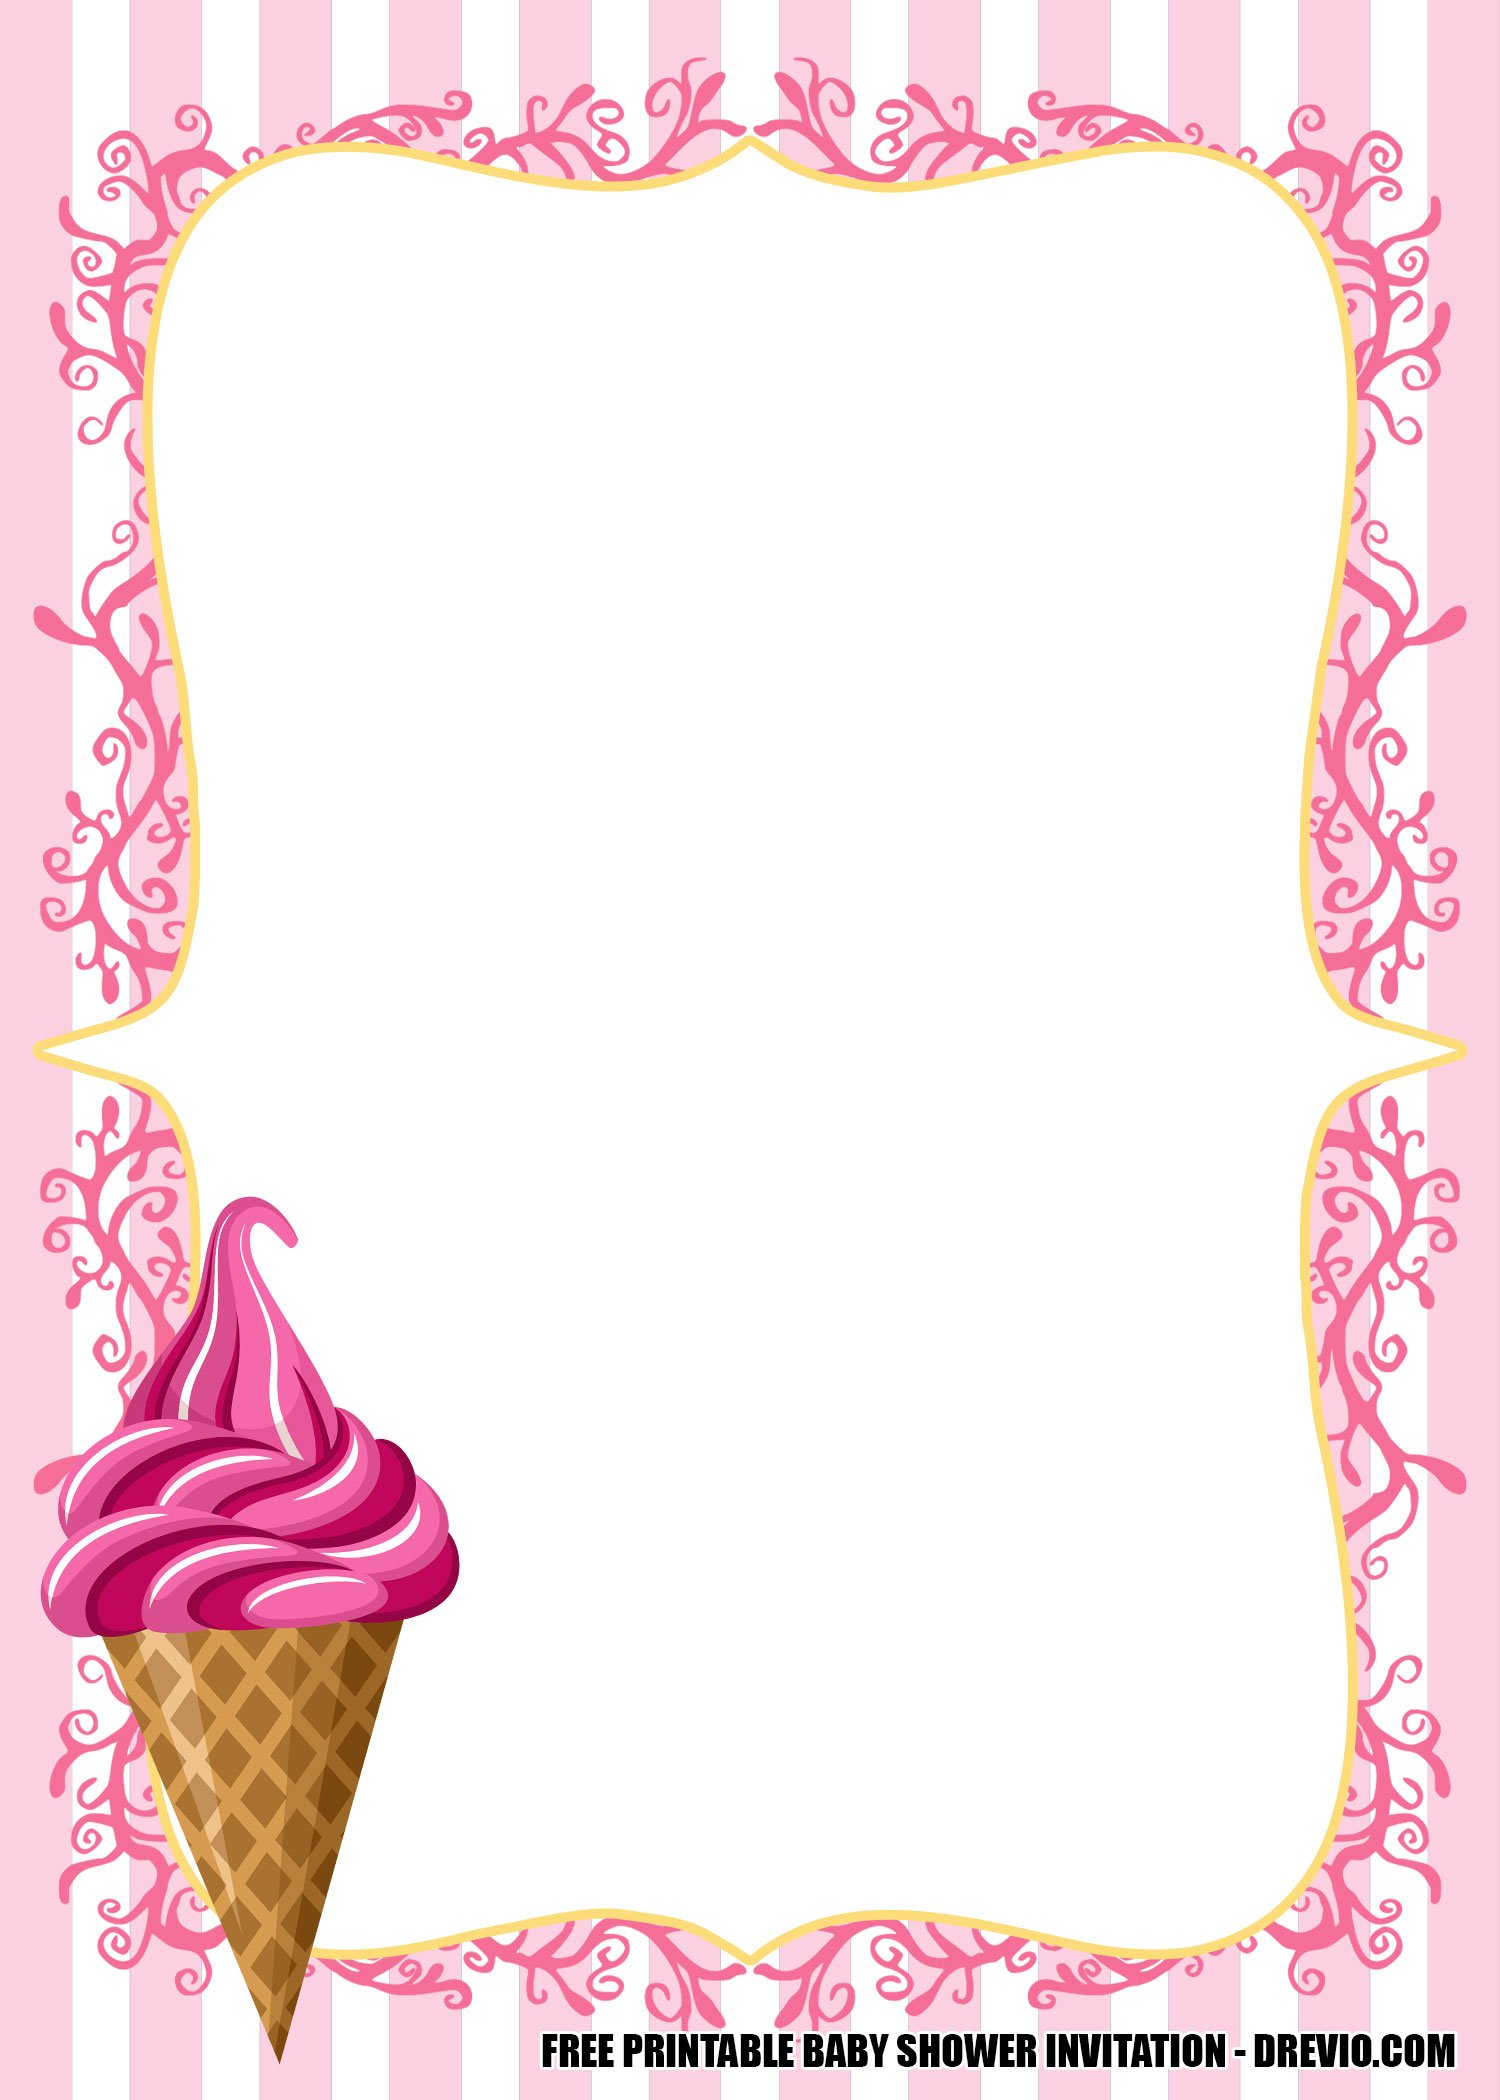 free-ice-cream-parlor-invitation-invitation-templates-free-printable